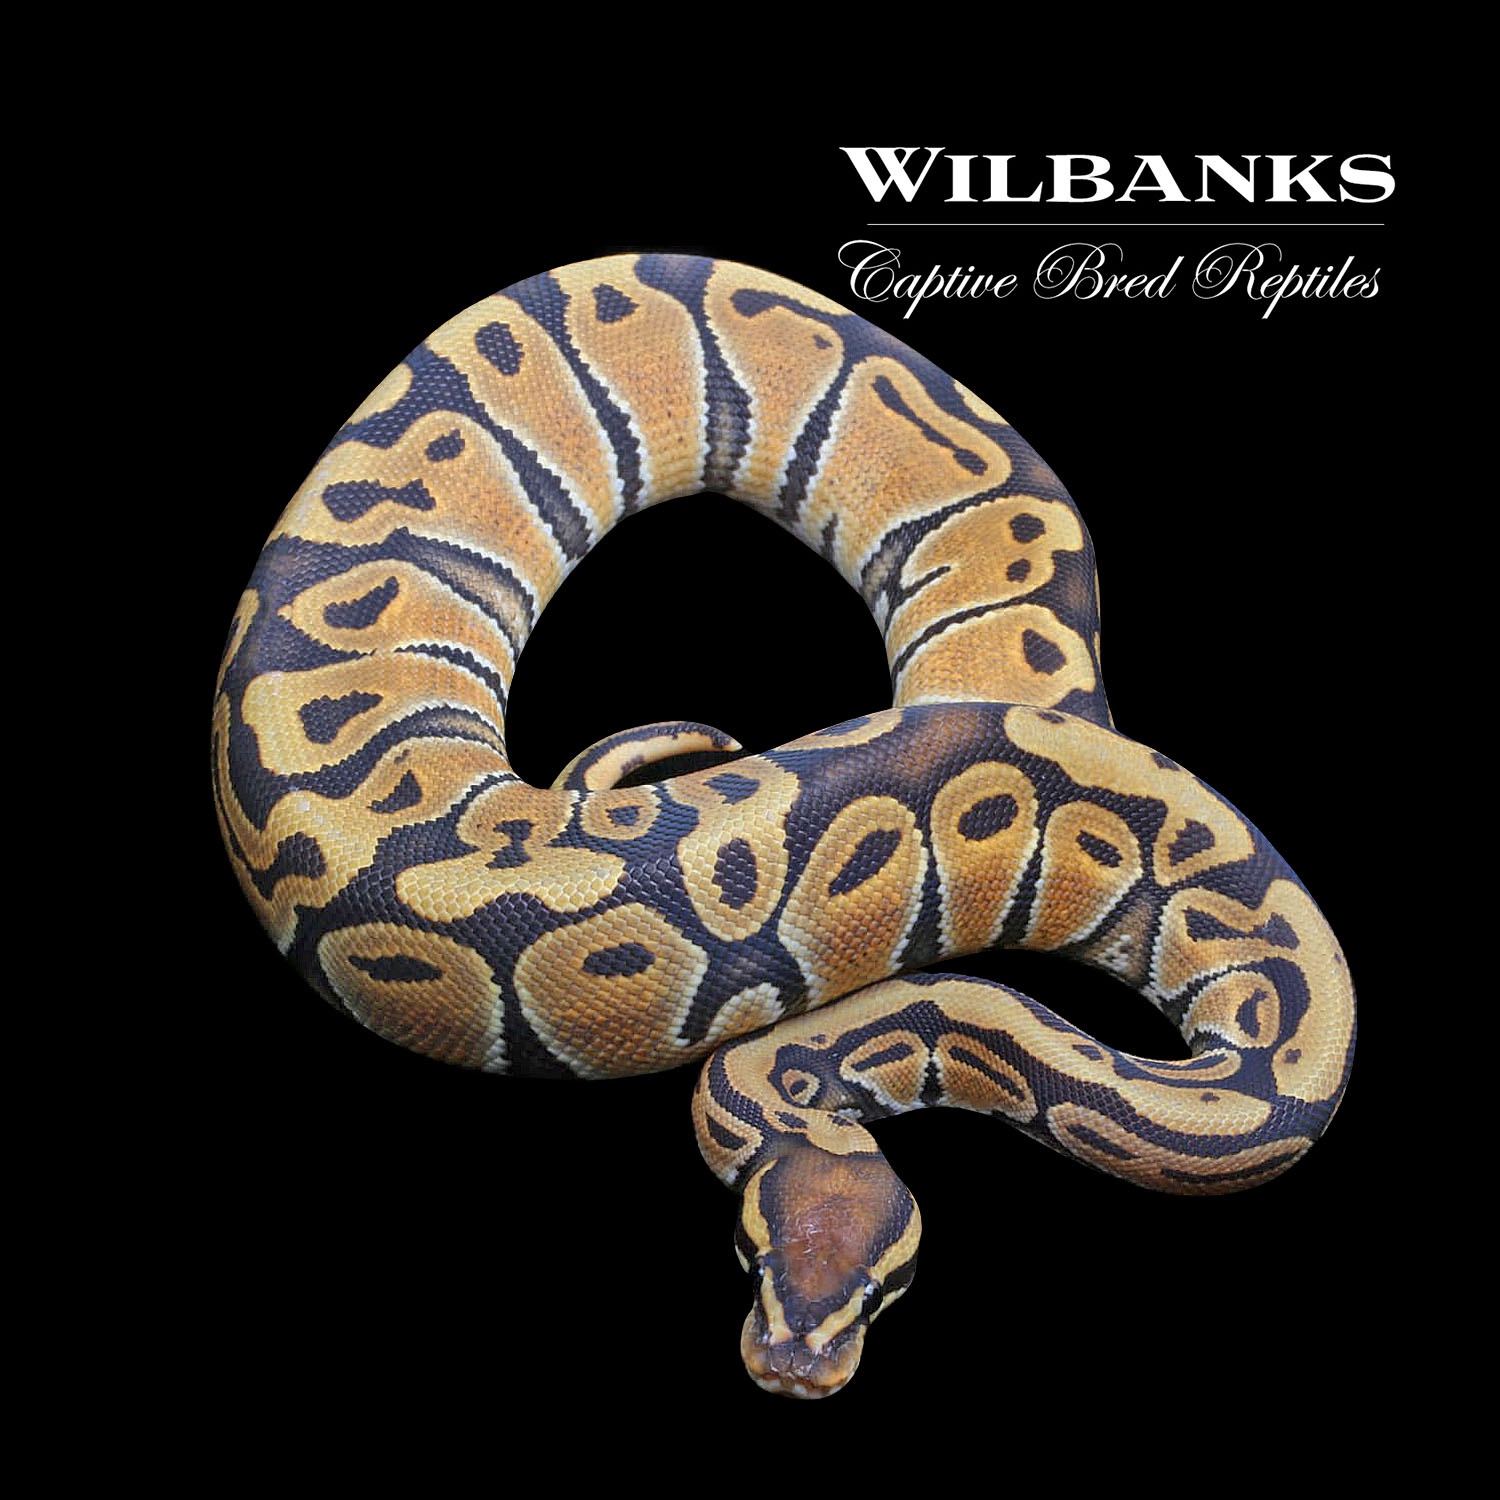 Orange Crush Ball Python by Wilbanks Captive Bred Reptiles